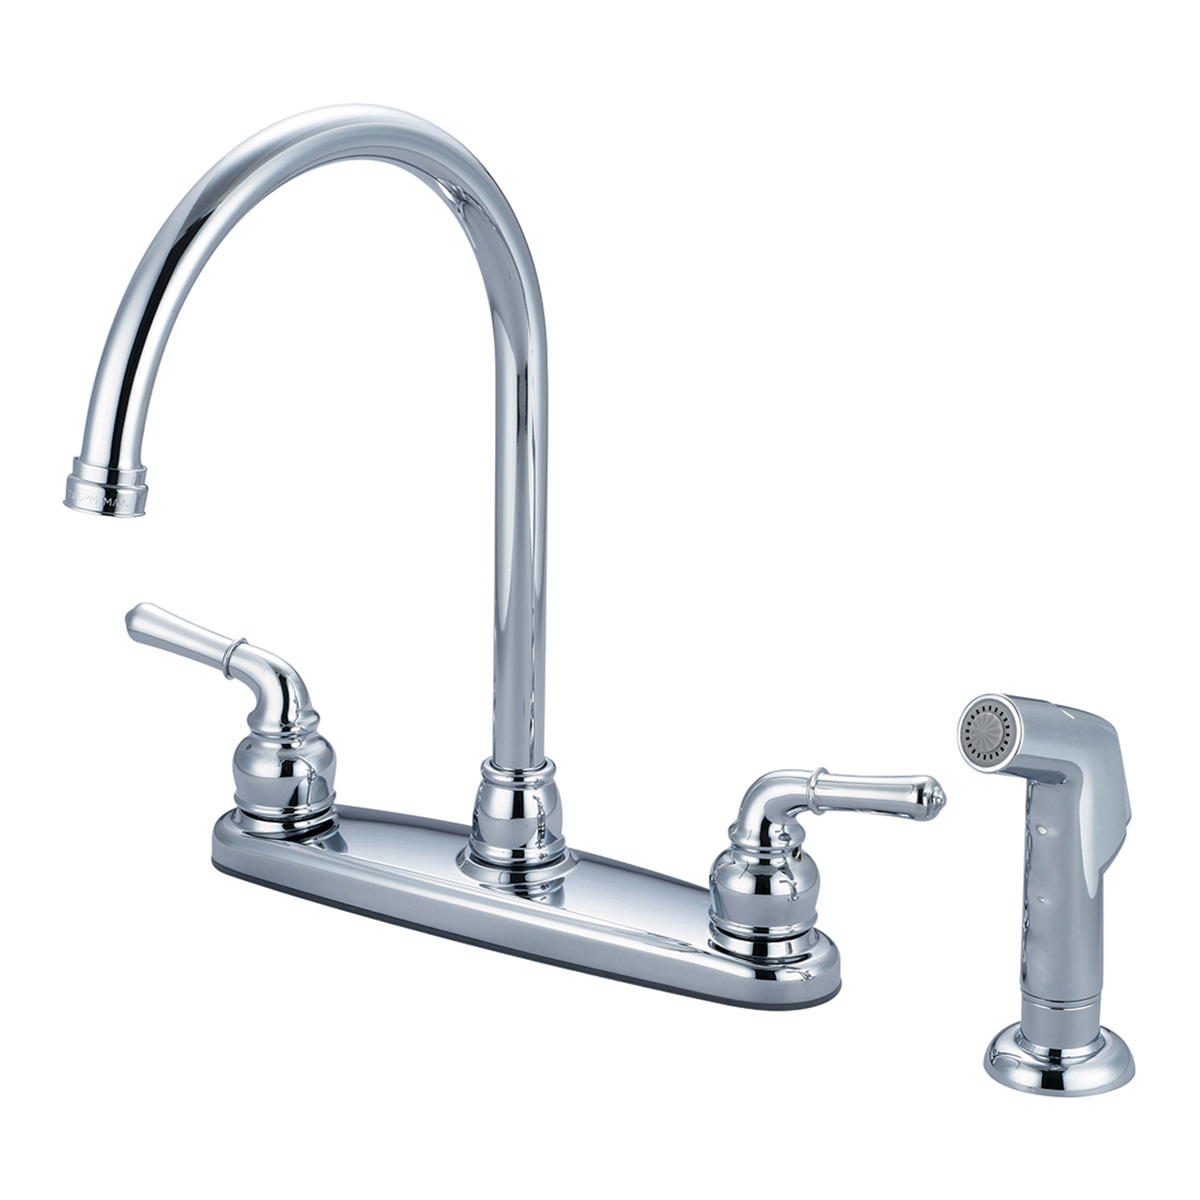 K-5342 Two Handle Kitchen Faucet - Chrome